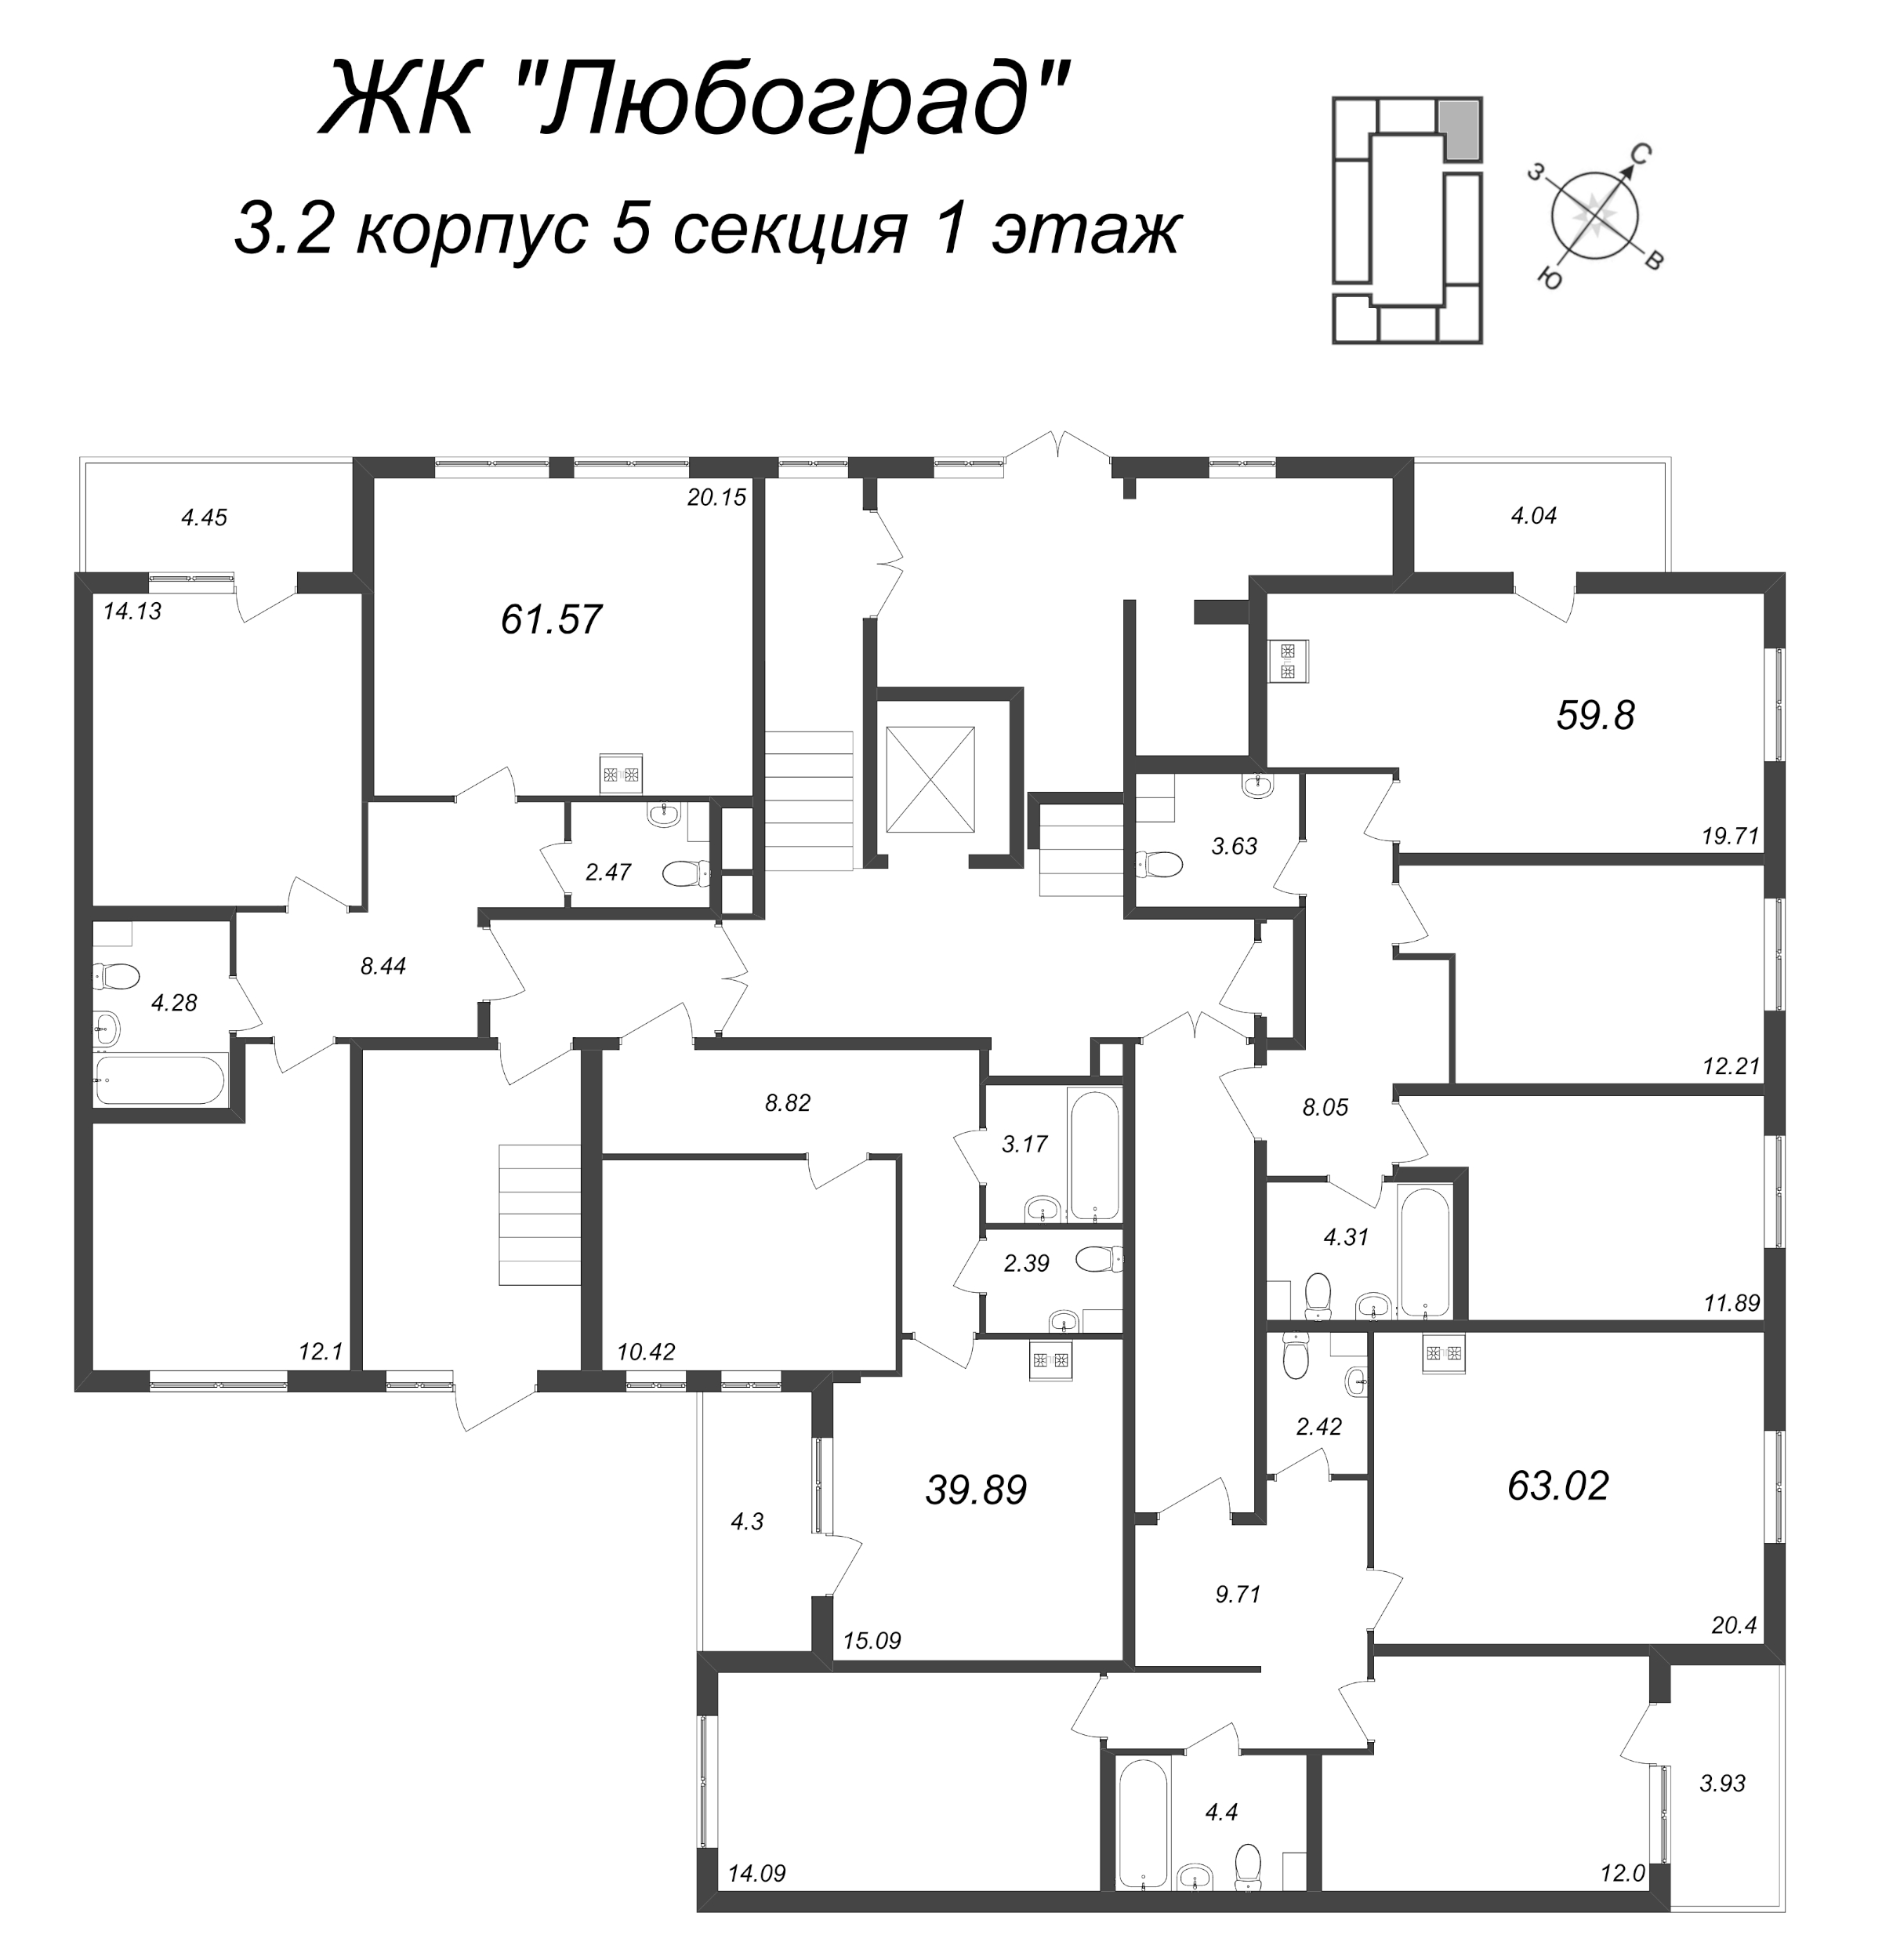 3-комнатная (Евро) квартира, 63.02 м² - планировка этажа